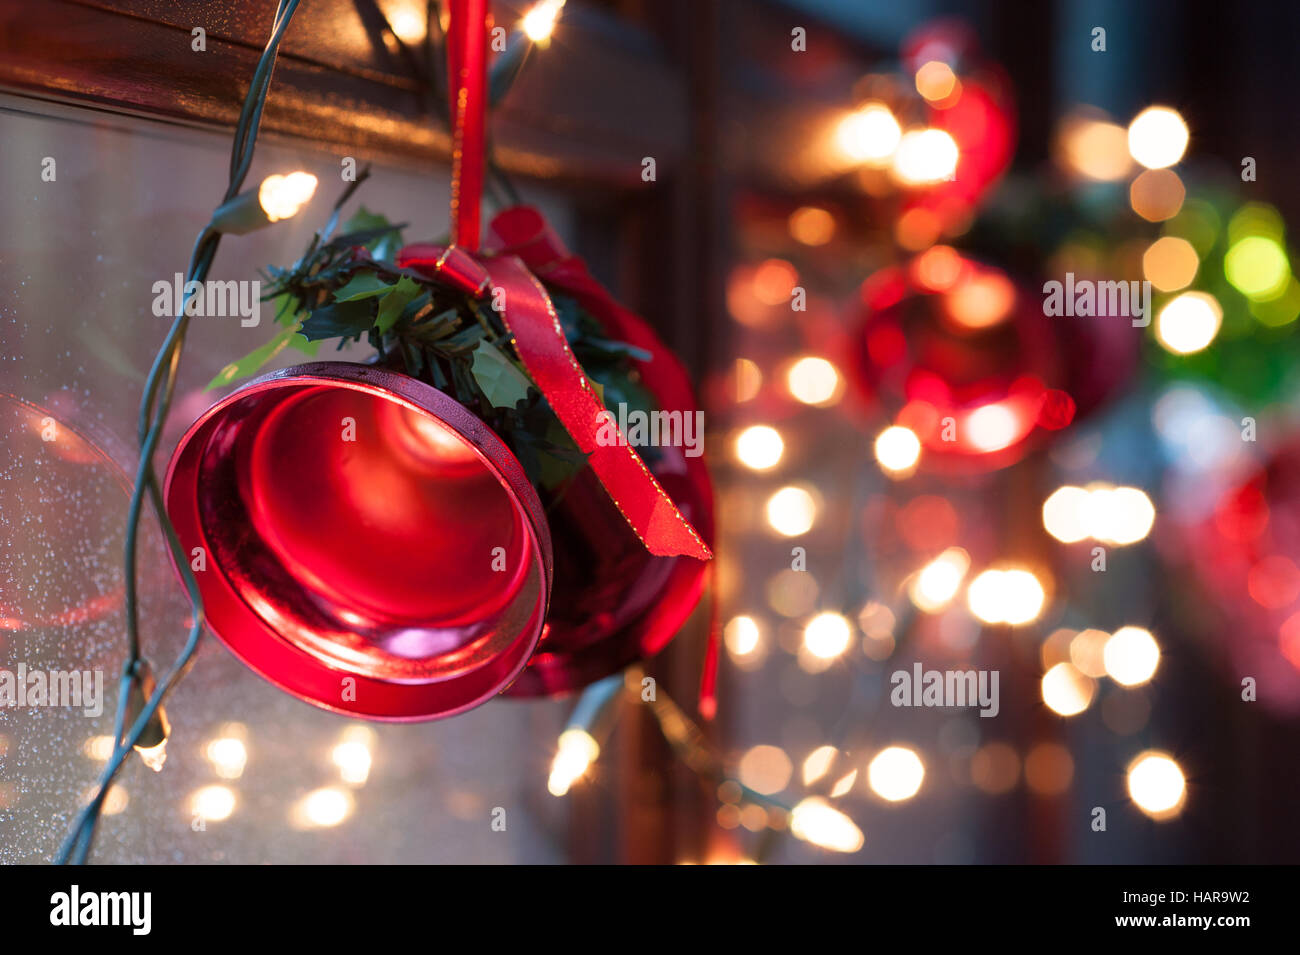 Christmas bells red on window Stock Photo